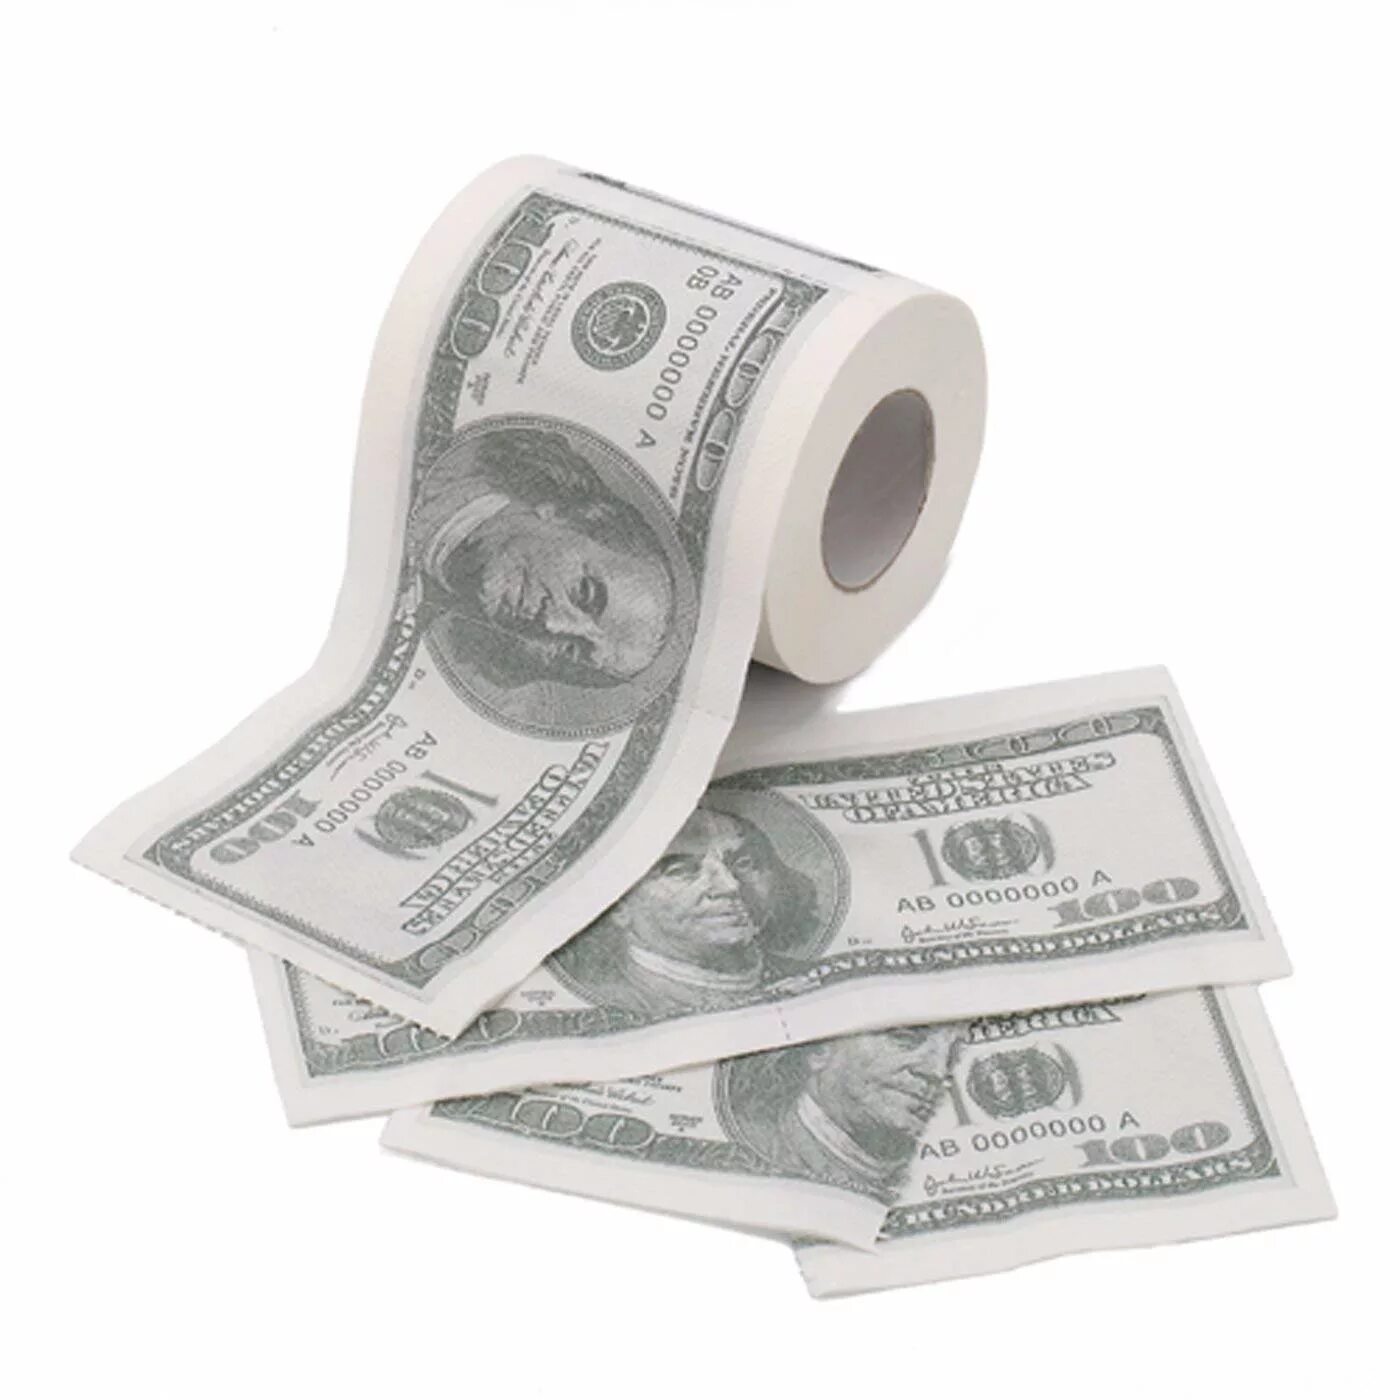 Доллар бумажный. Доллар бумага денежная. Бумажные 100 долларов. Туалетная бумага 100 долларов". Бумажный доллар цена